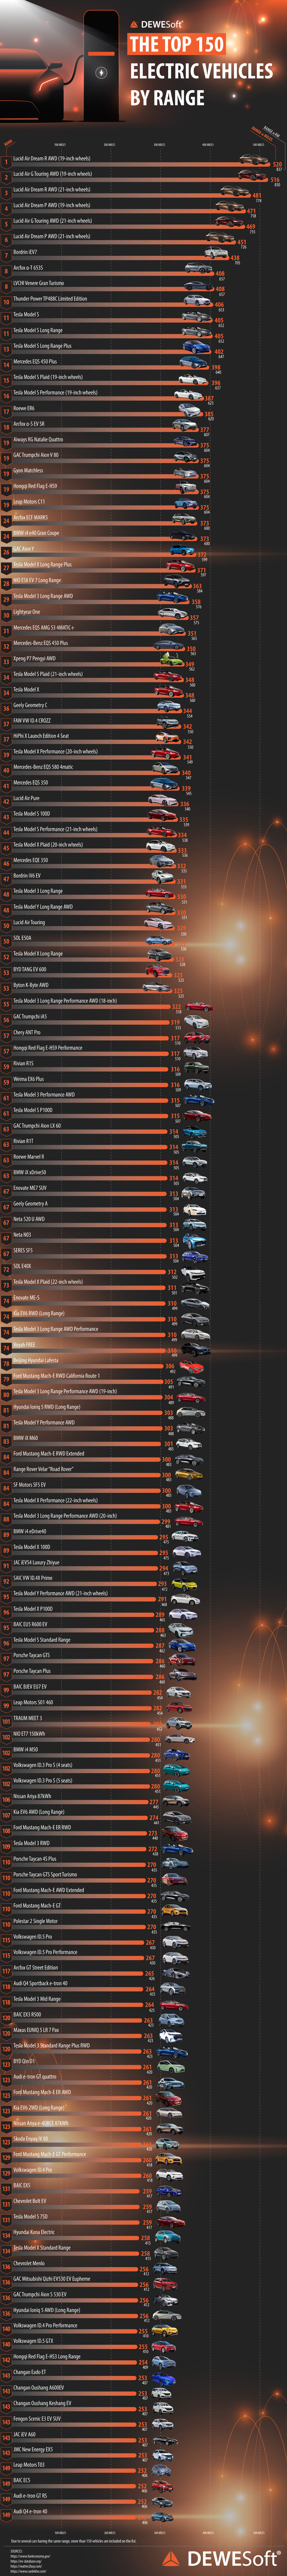 top-150-electric-vehicles-range-7